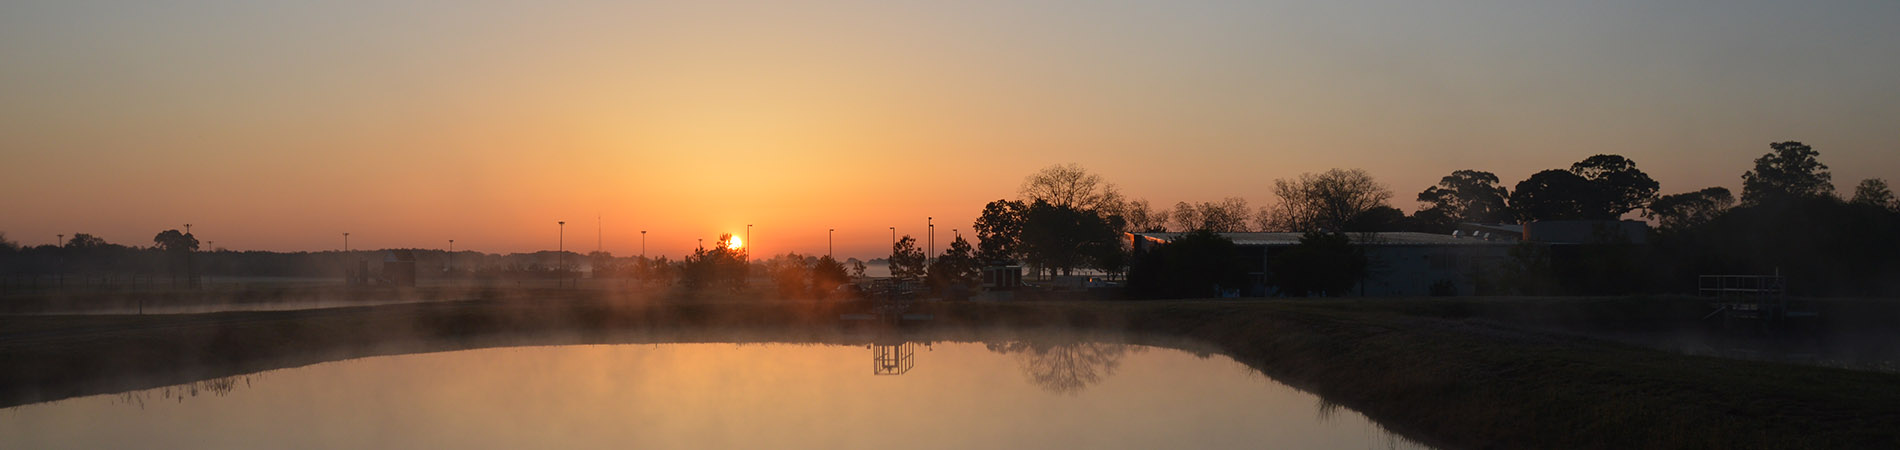 Hatchery Pond at Sunset